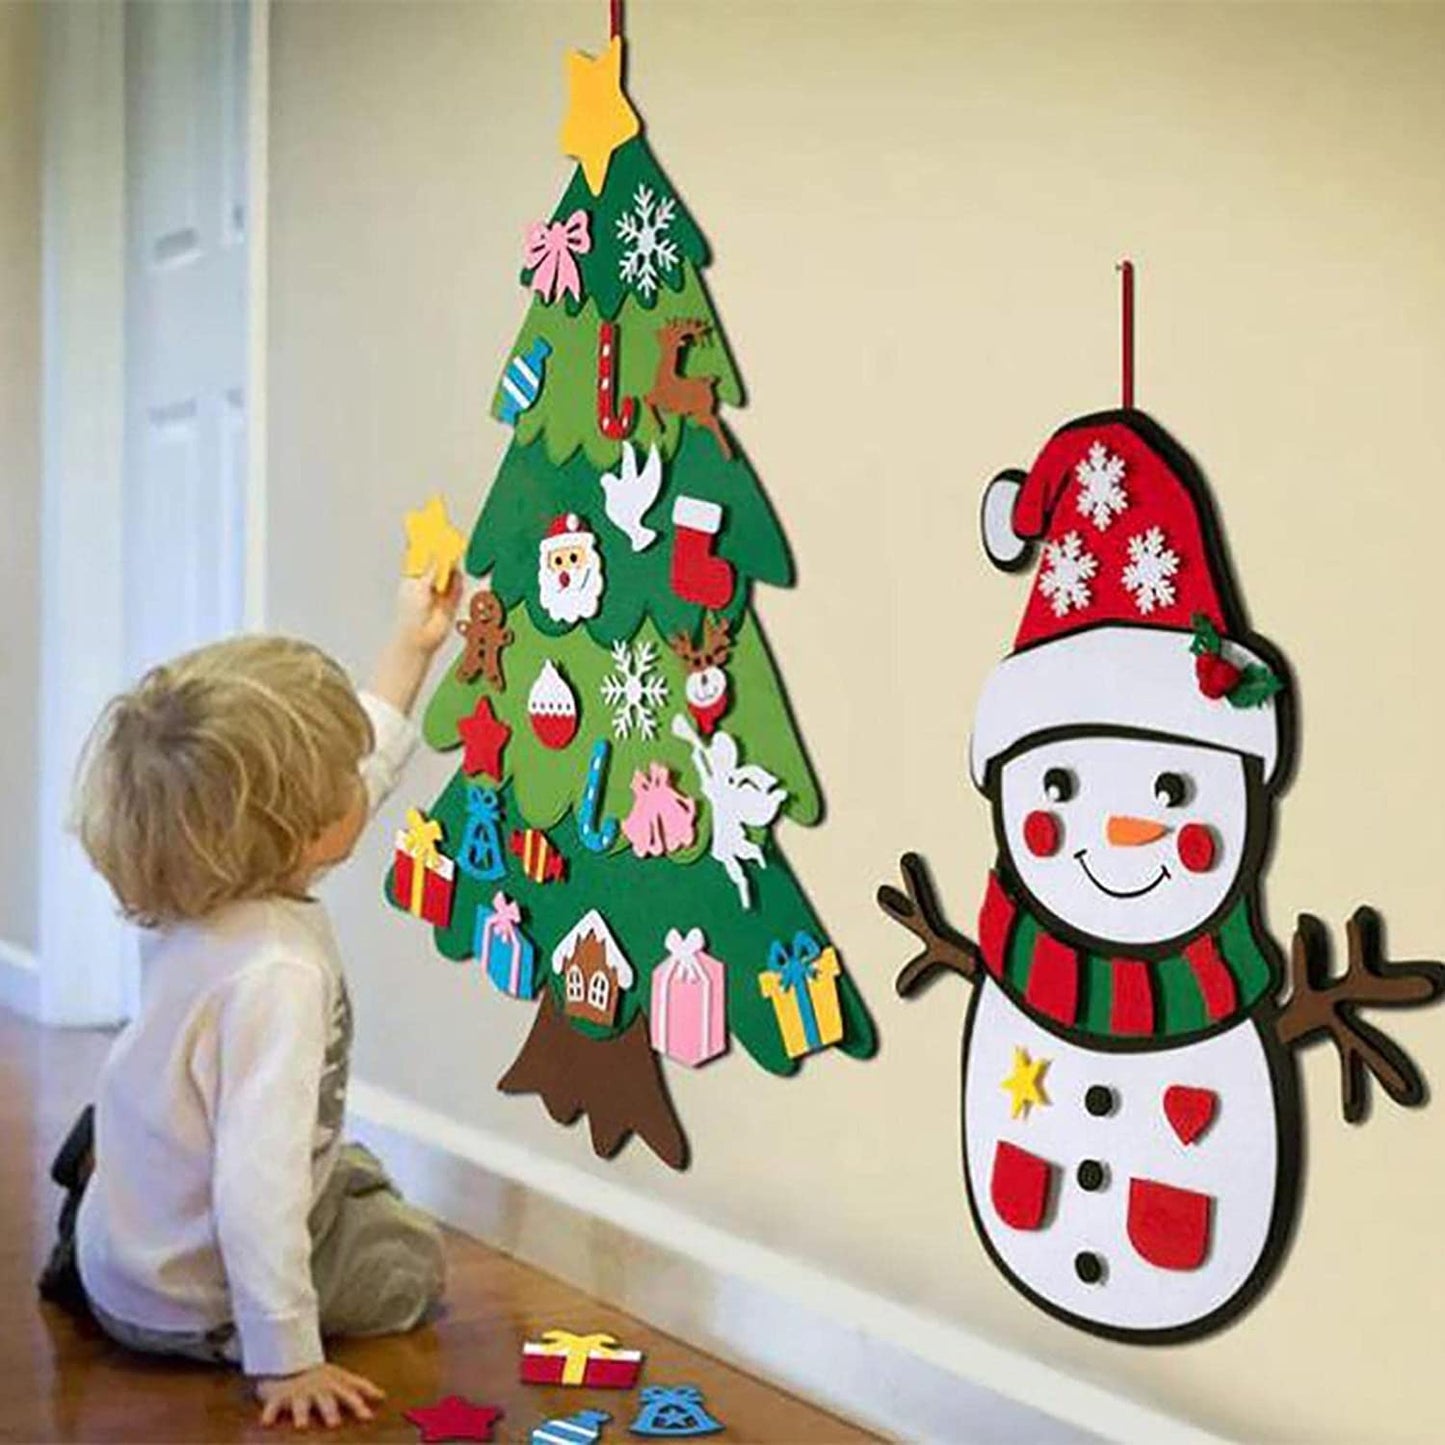 Montessori Christmas Tree for Toddlers, Montessori Christmas Tree with Lights, Kids Interactive Christmas Tree with 21Pcs Detachable Tree Ornaments for Kid Wall